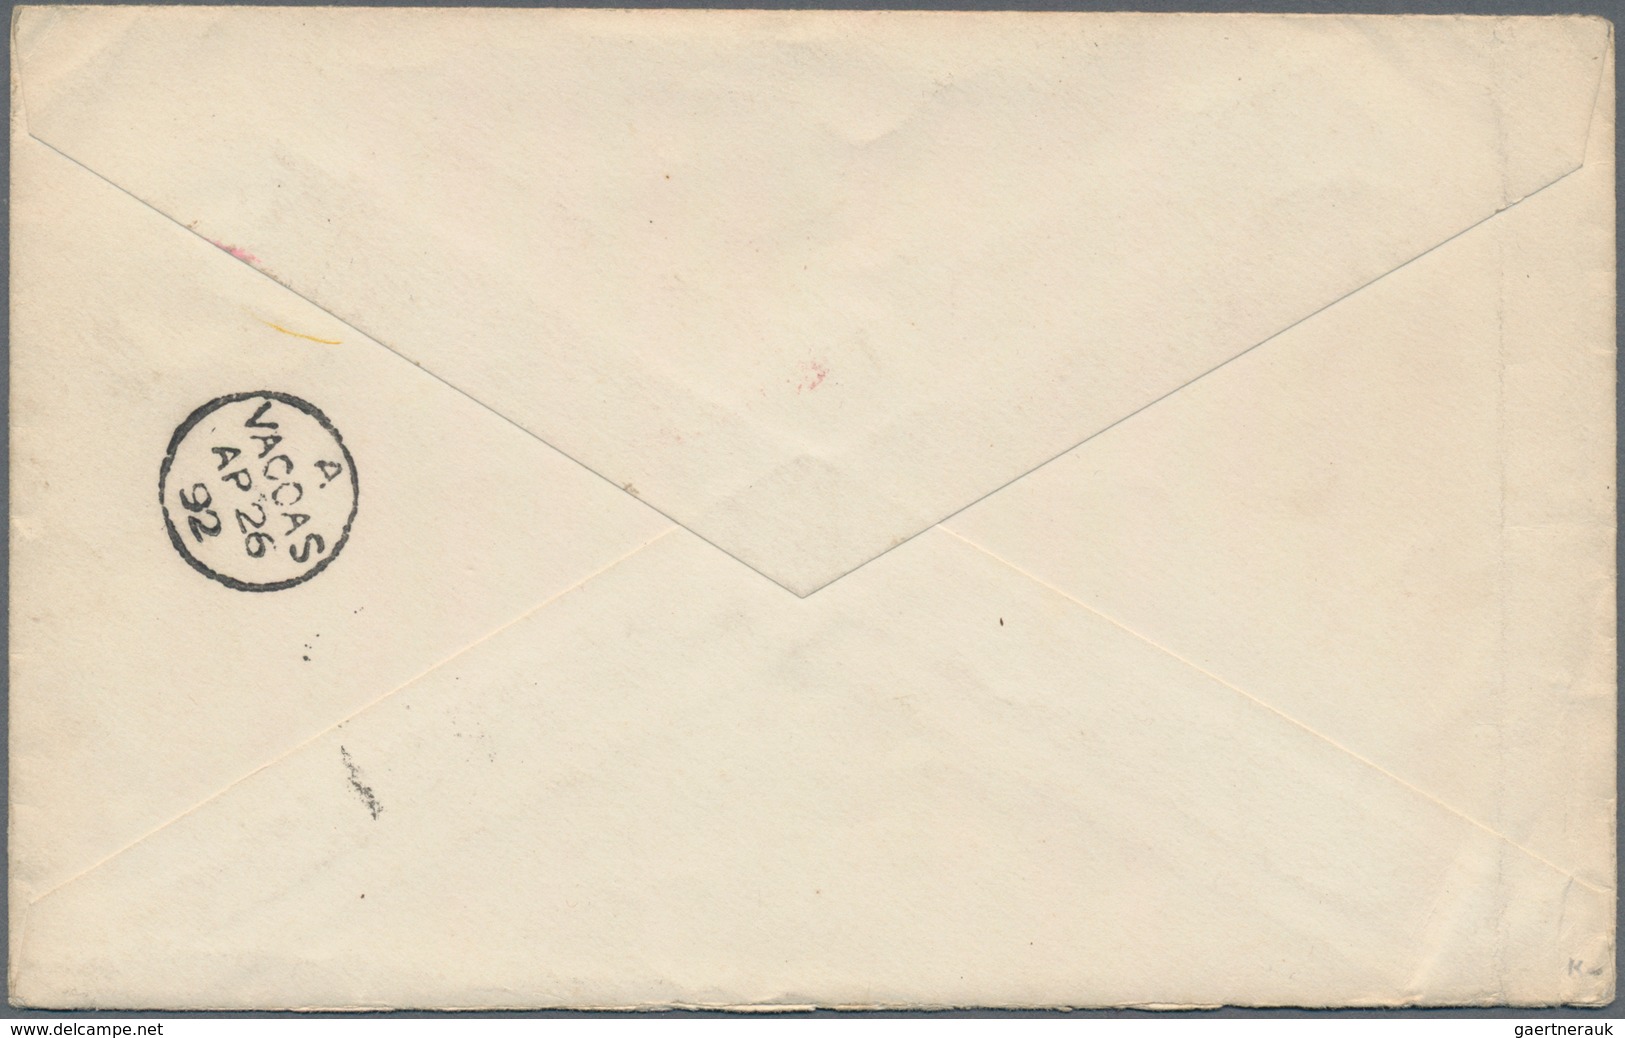 Mauritius: 1892. 50c Yellow Postal Stationery Envelope, Cancelled Mauritius A AP 26 92 And Oval Regi - Mauritius (...-1967)